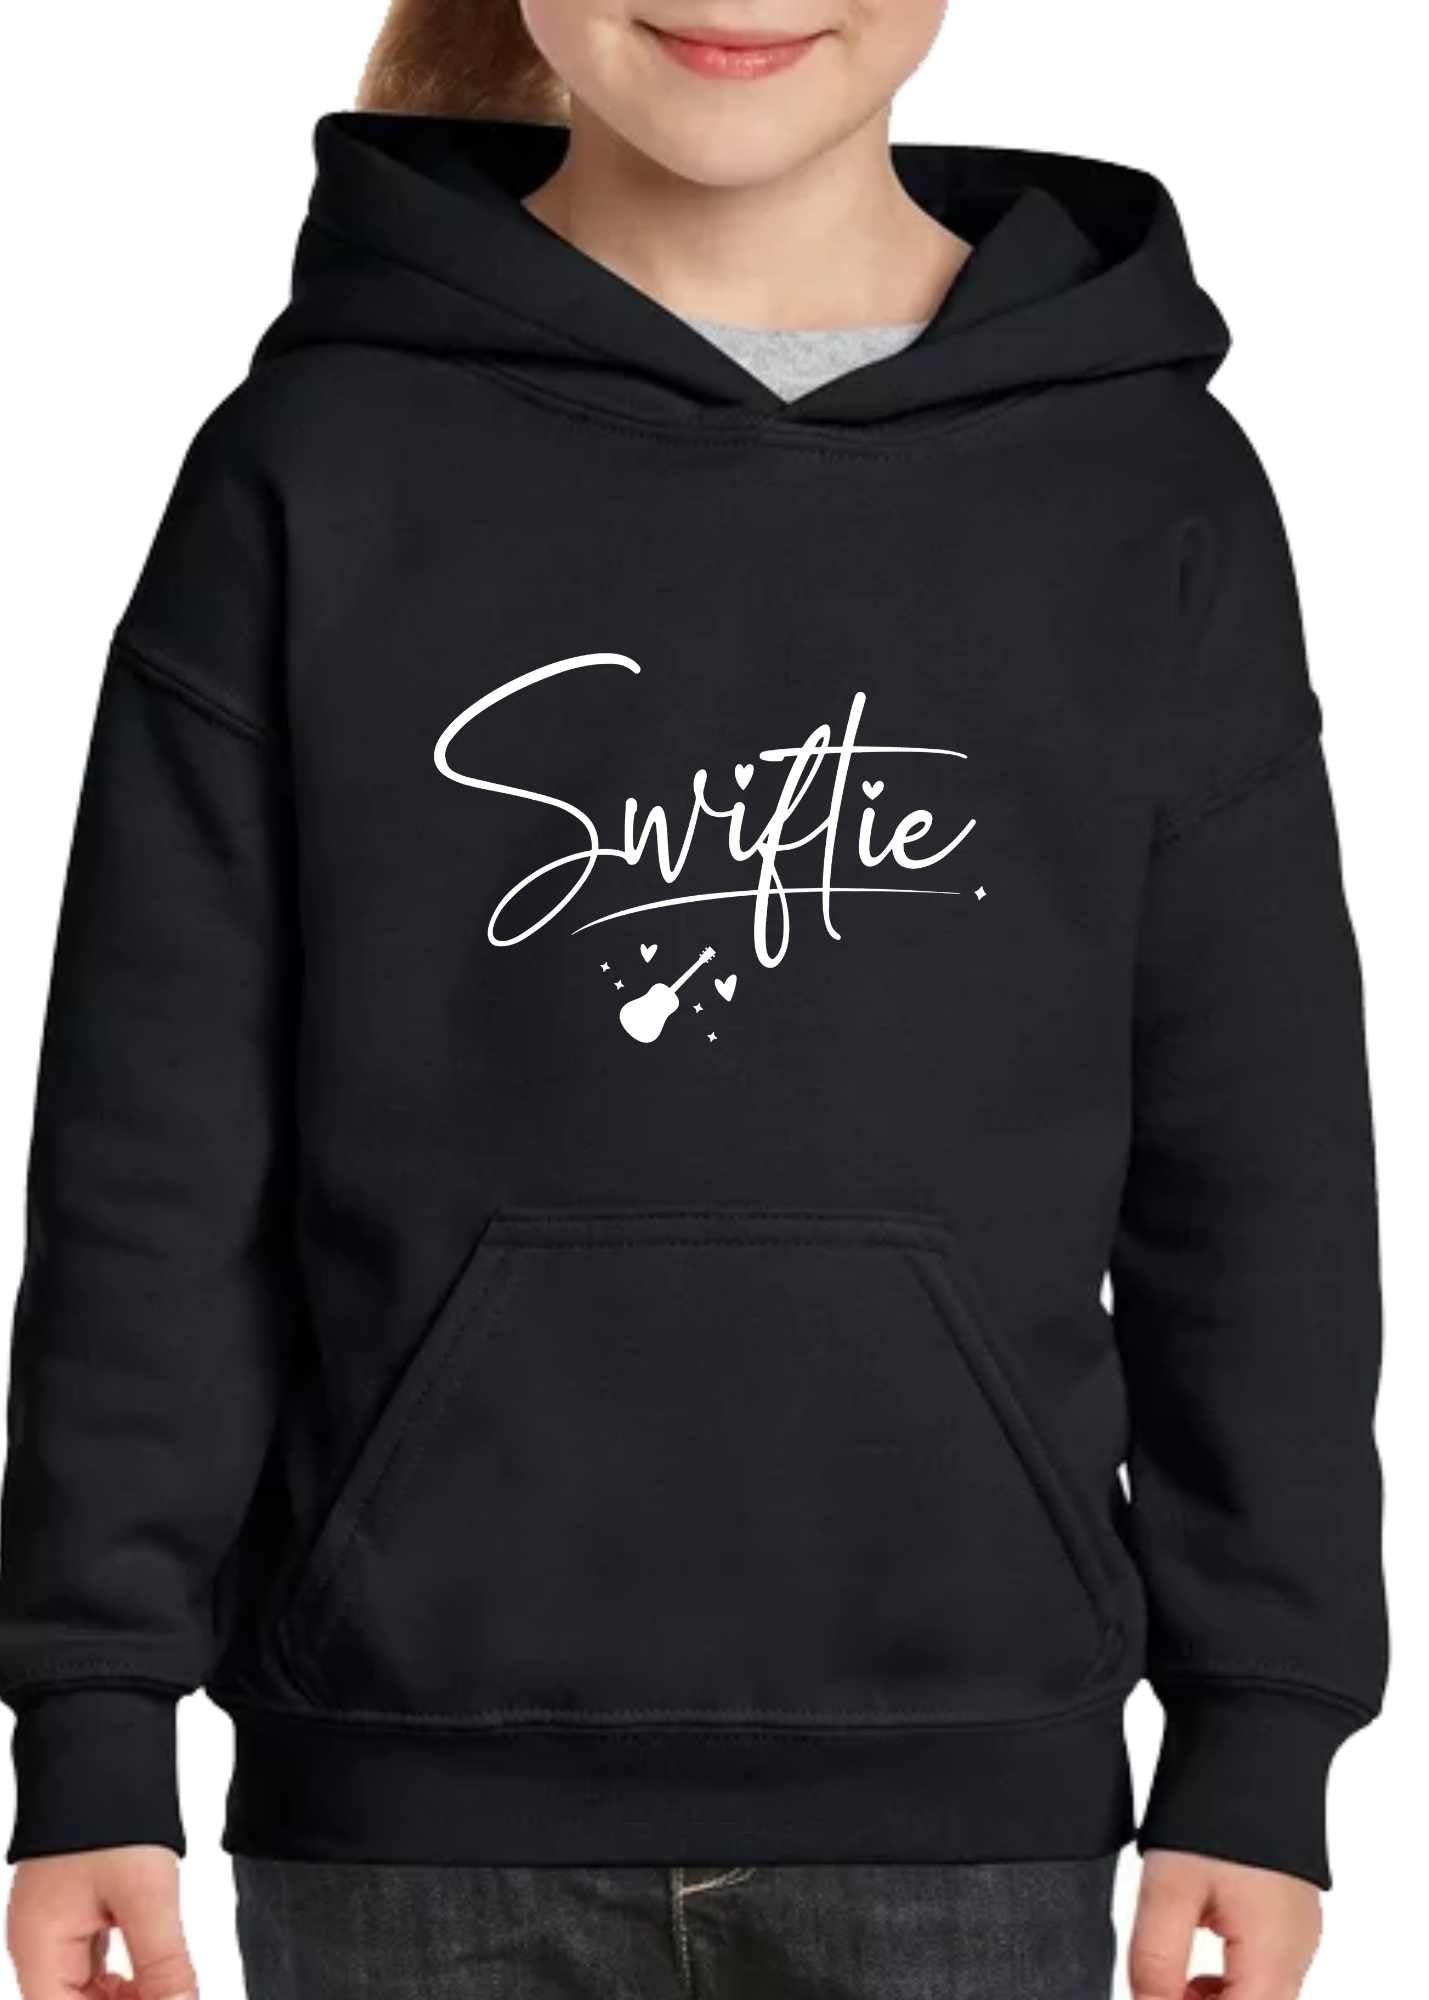 SWIFTIE Taylor Swift Hoodie Youth Fit/Hoodie